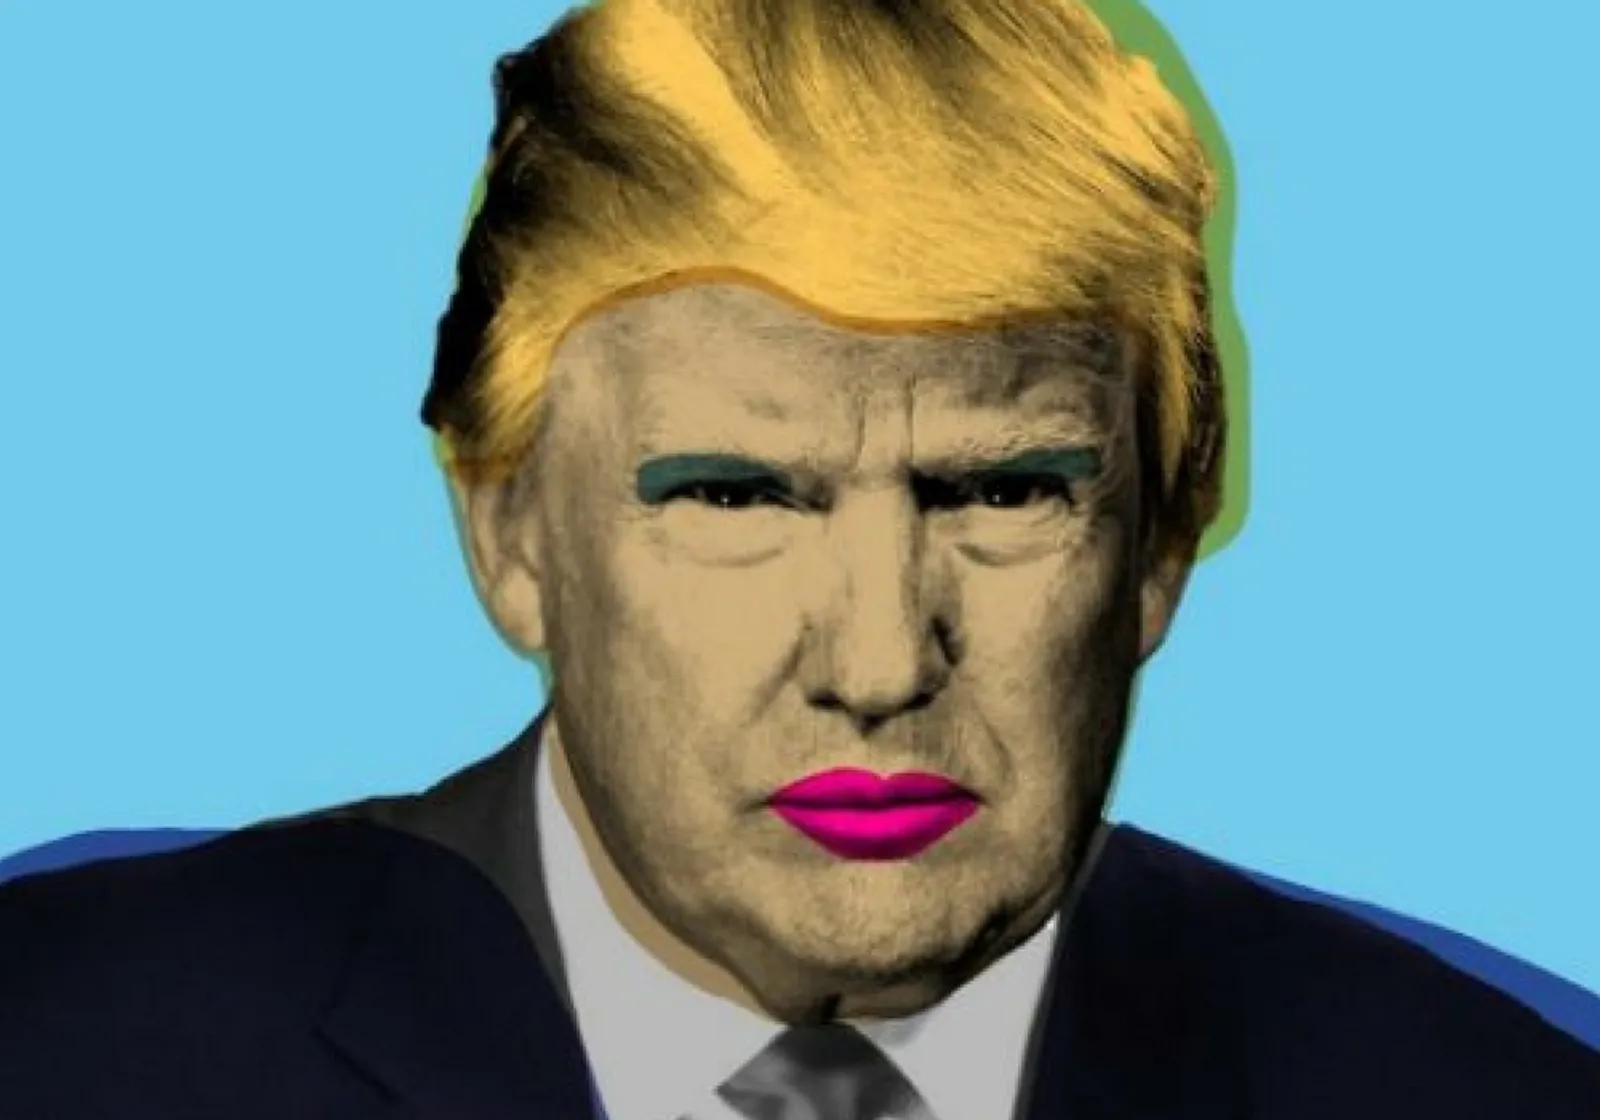 Mahasiswa Ini Ekspresikan Rasa Kesalnya kepada Donald Trump dengan Lipstik